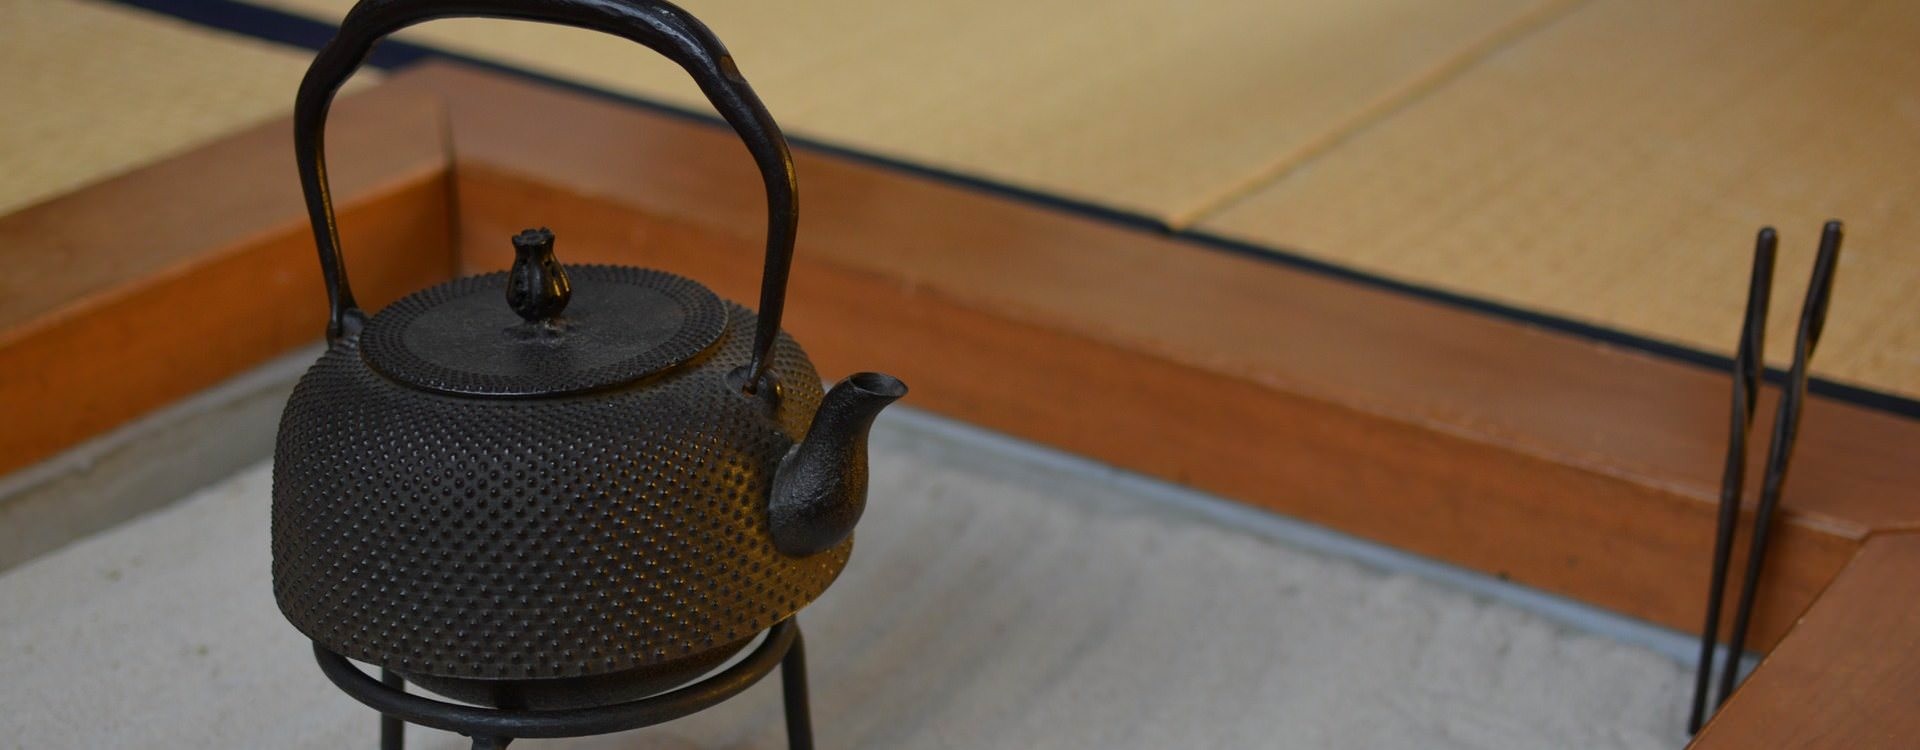 Teteras de hierro fundido ideales para preparar té - Sabor a Té - Blog  Oficial